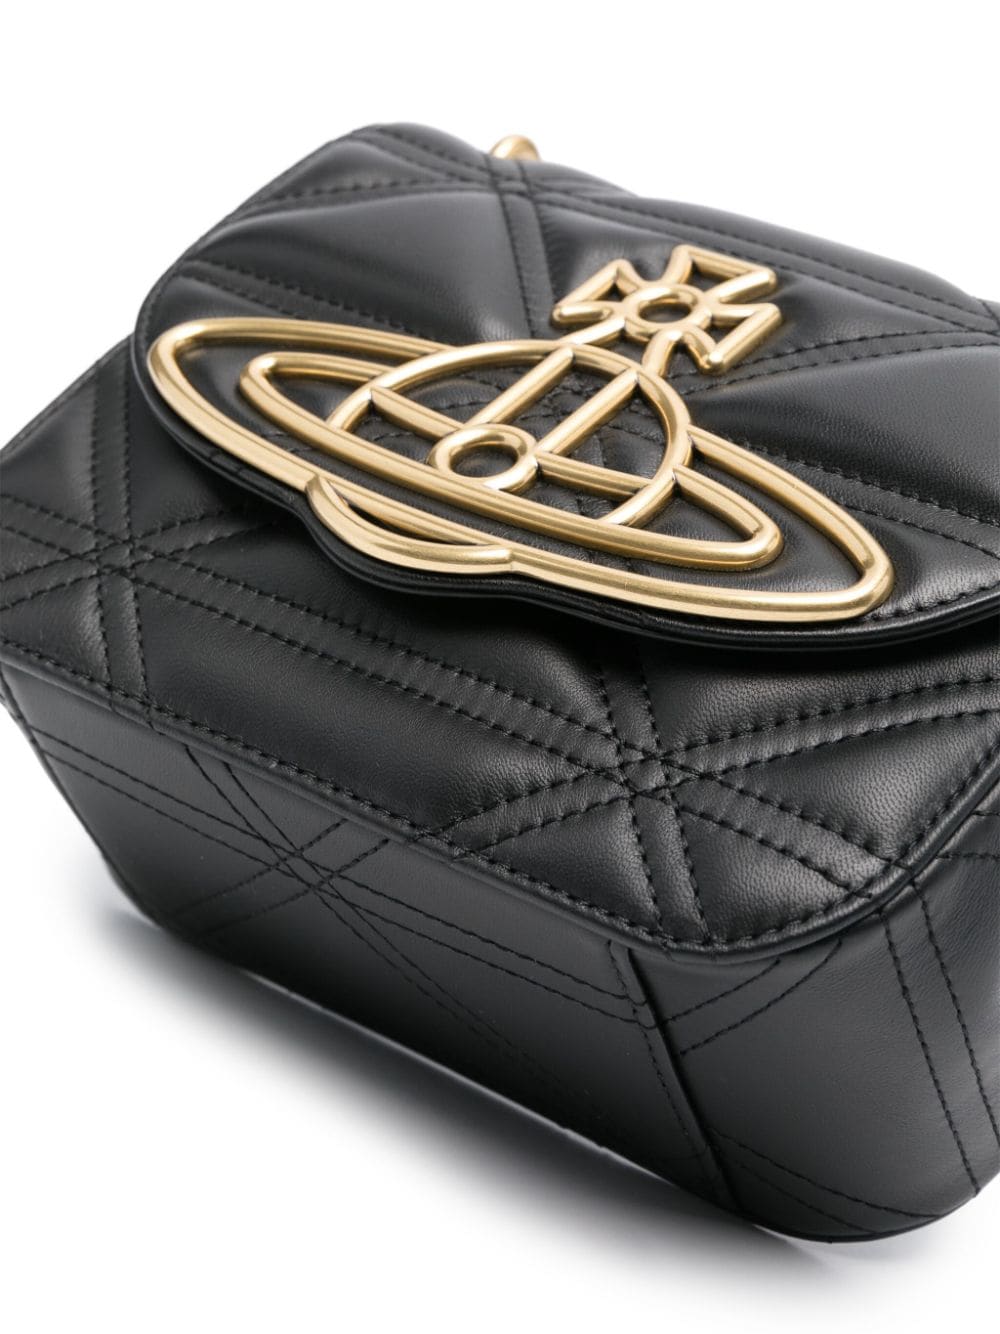 VIVIENNE WESTWOOD Matelassé Crossbody Handbag with Signature Orb Detail